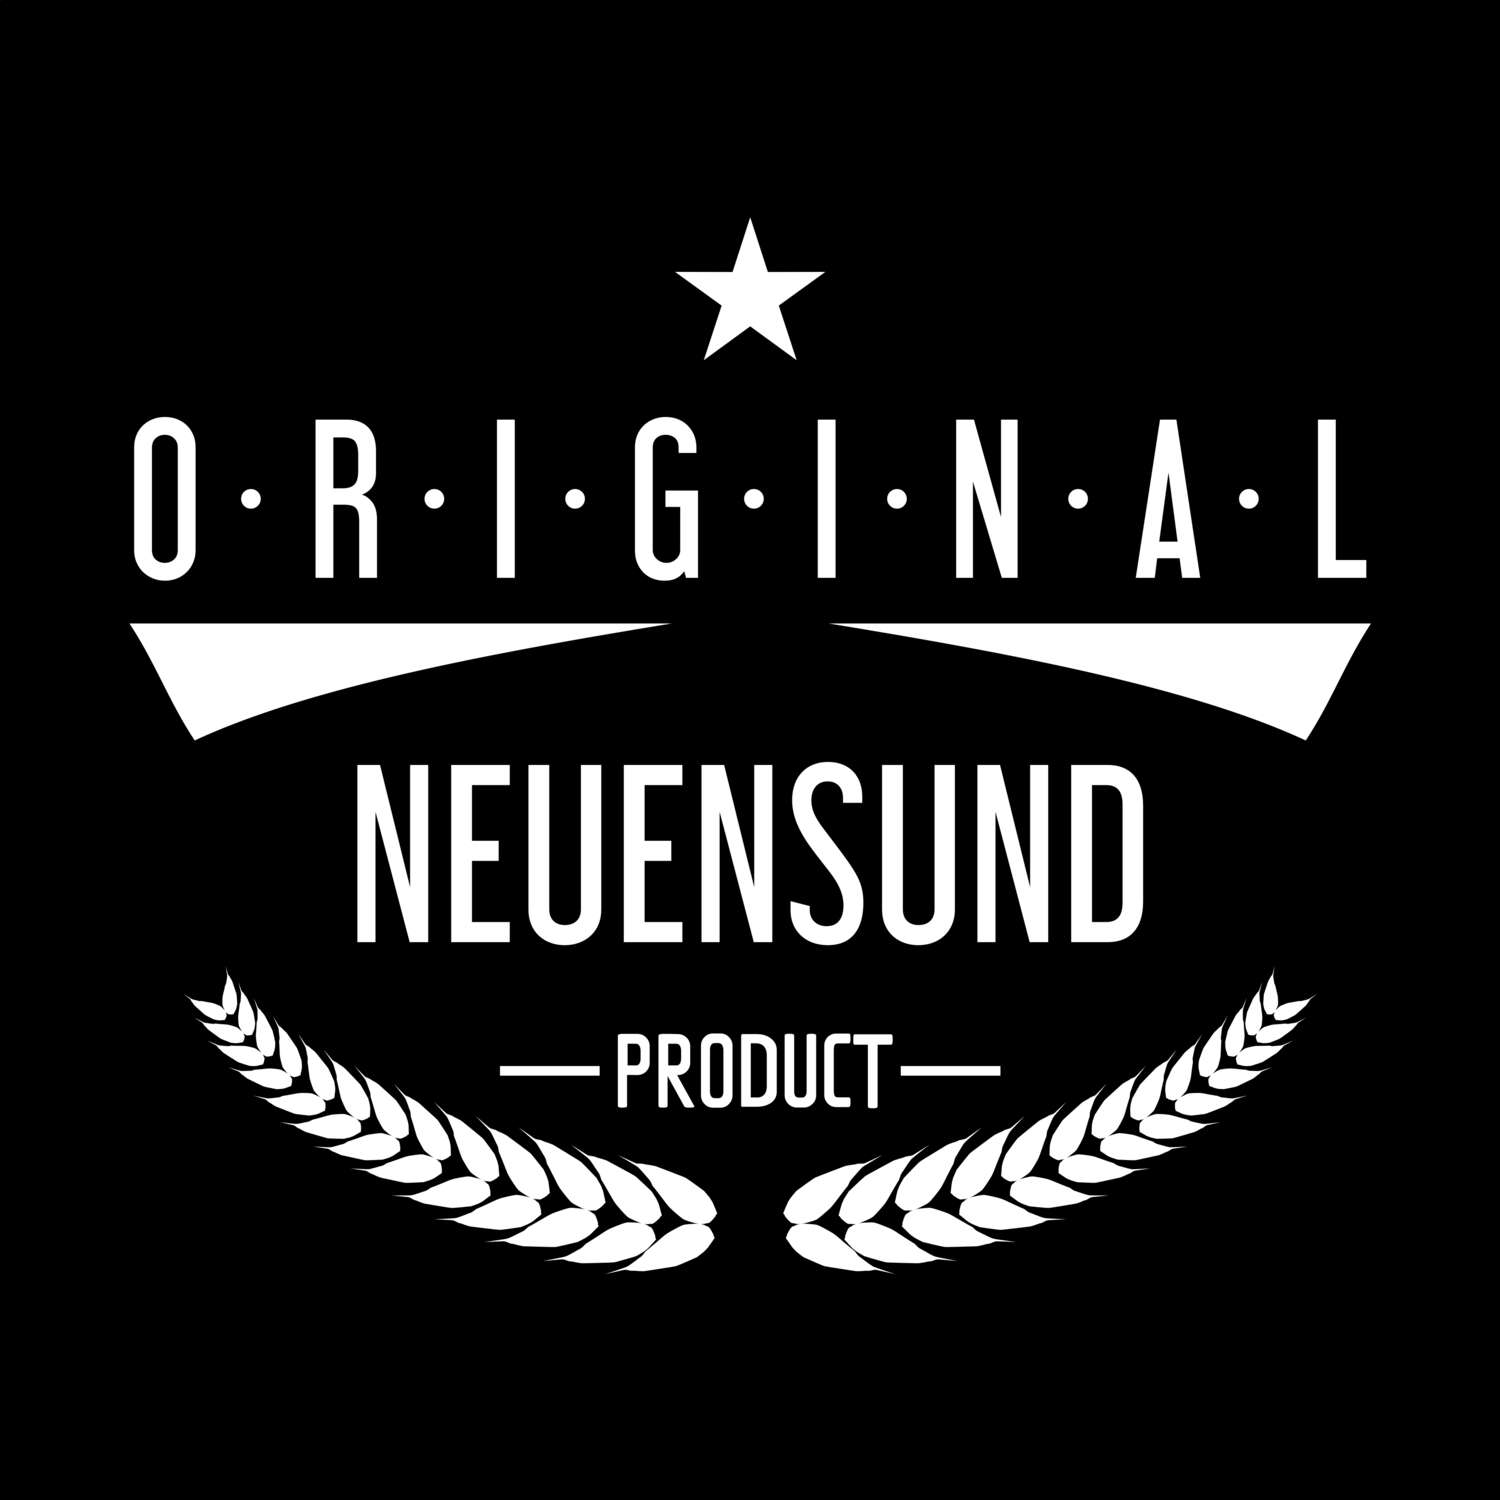 Neuensund T-Shirt »Original Product«